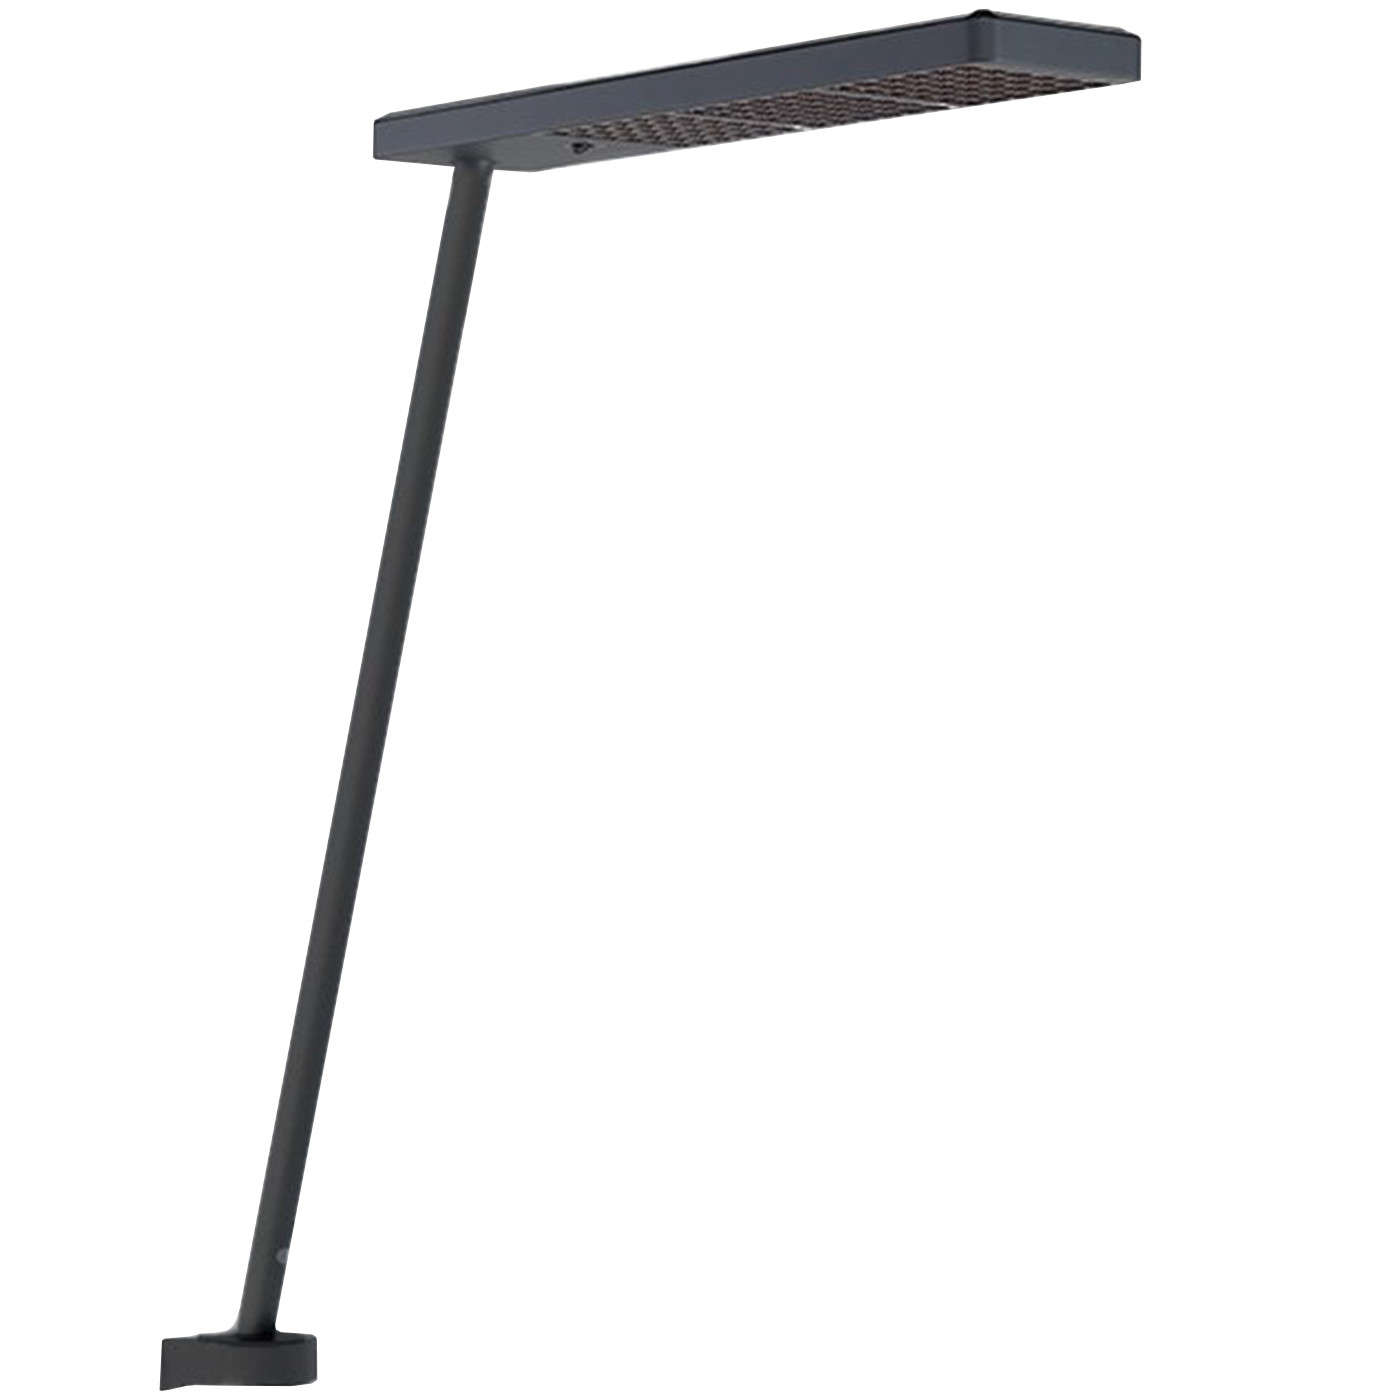 Tobias Grau XT-A Single Table Clamp